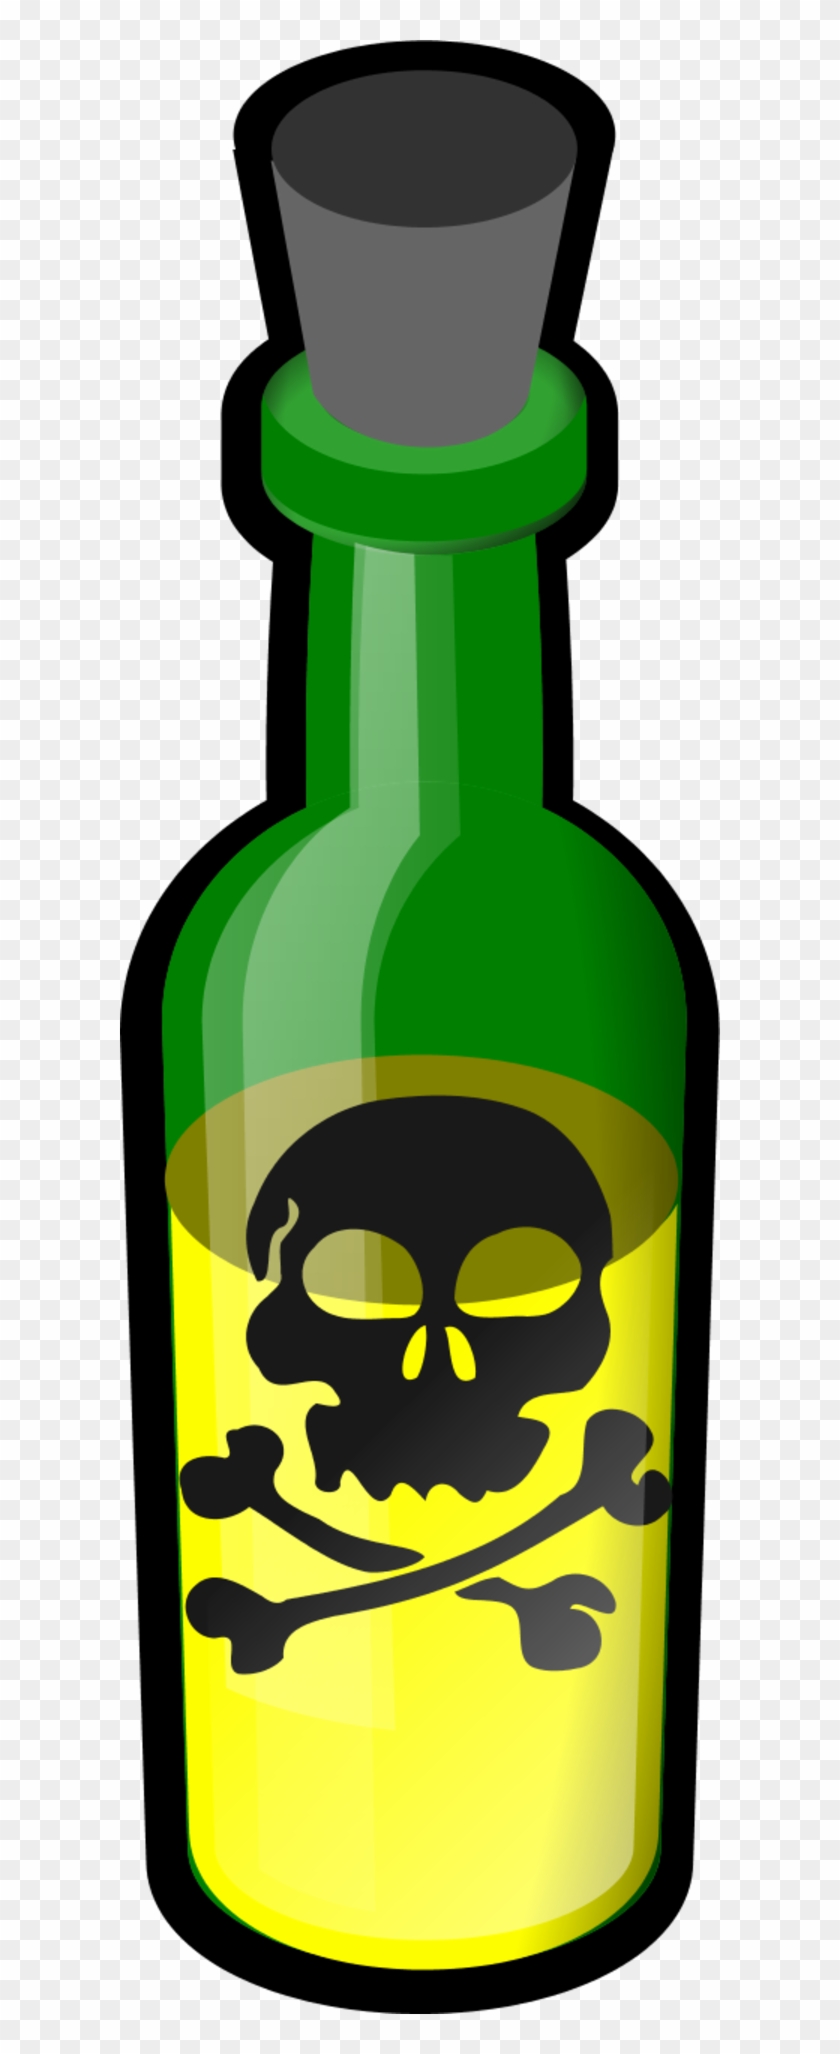 Poison Bottle Vector Clip Art - Poison Bottle Clip Art #212373